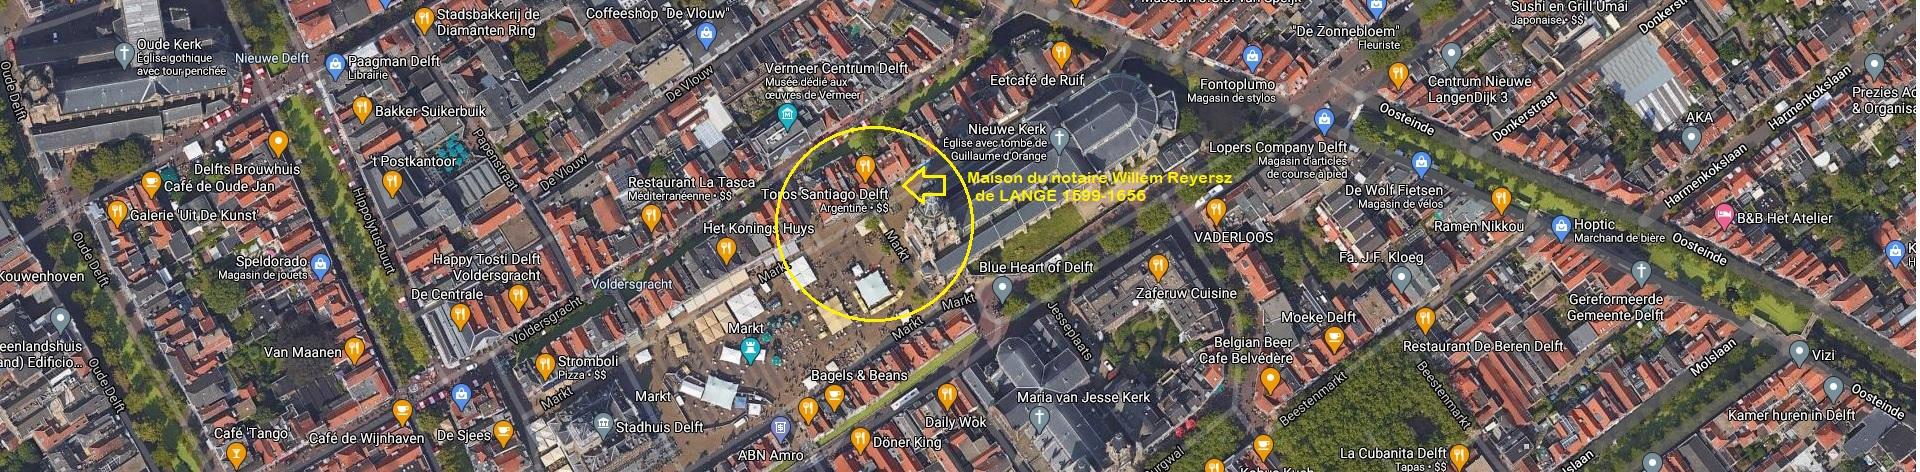 Delft grote markt vue satellite